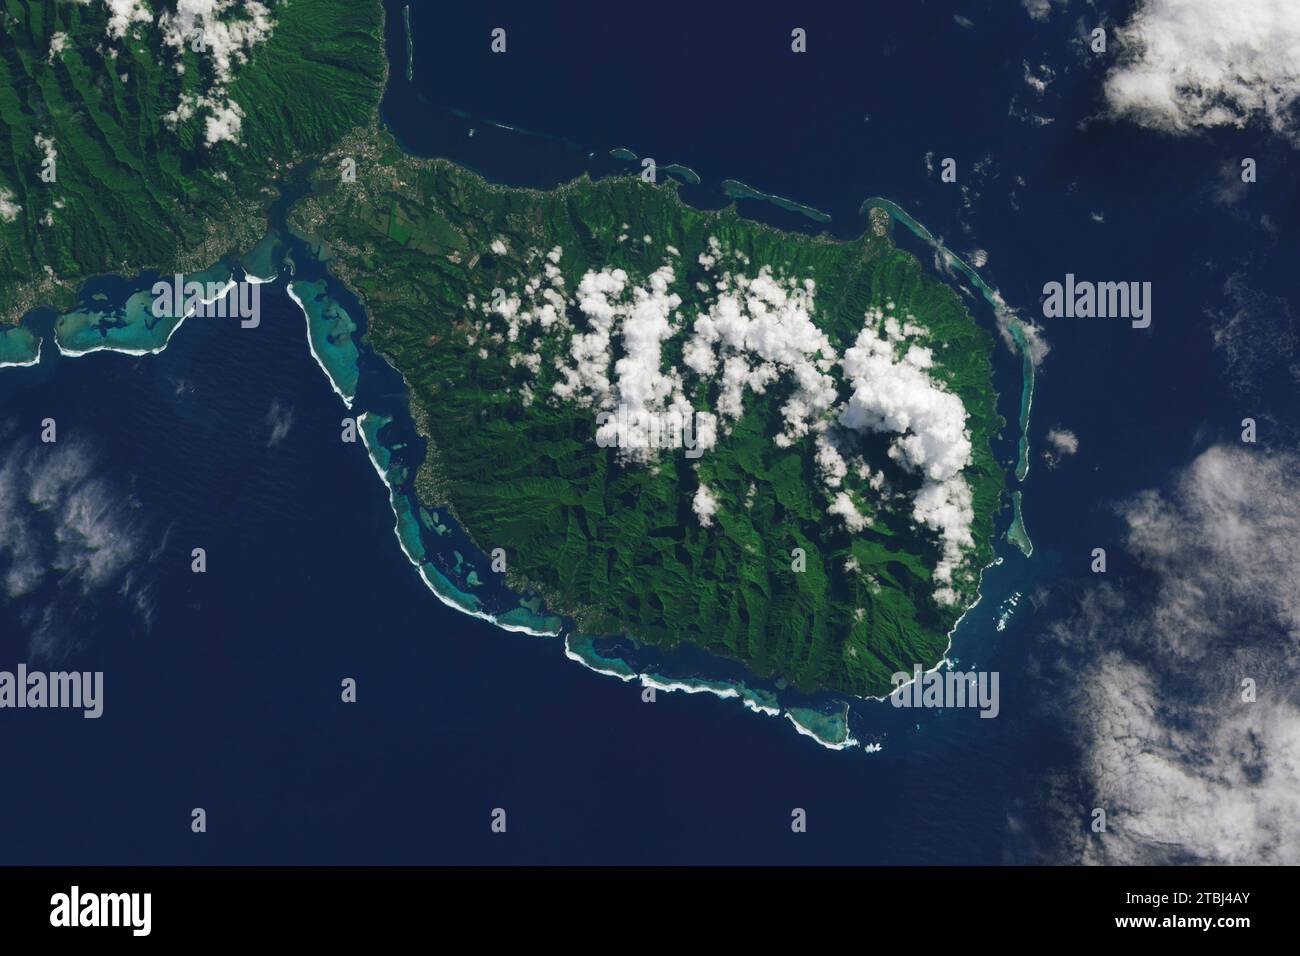 Imagen satelital en color natural de Tahití, una isla de la Polinesia Francesa. Foto de stock